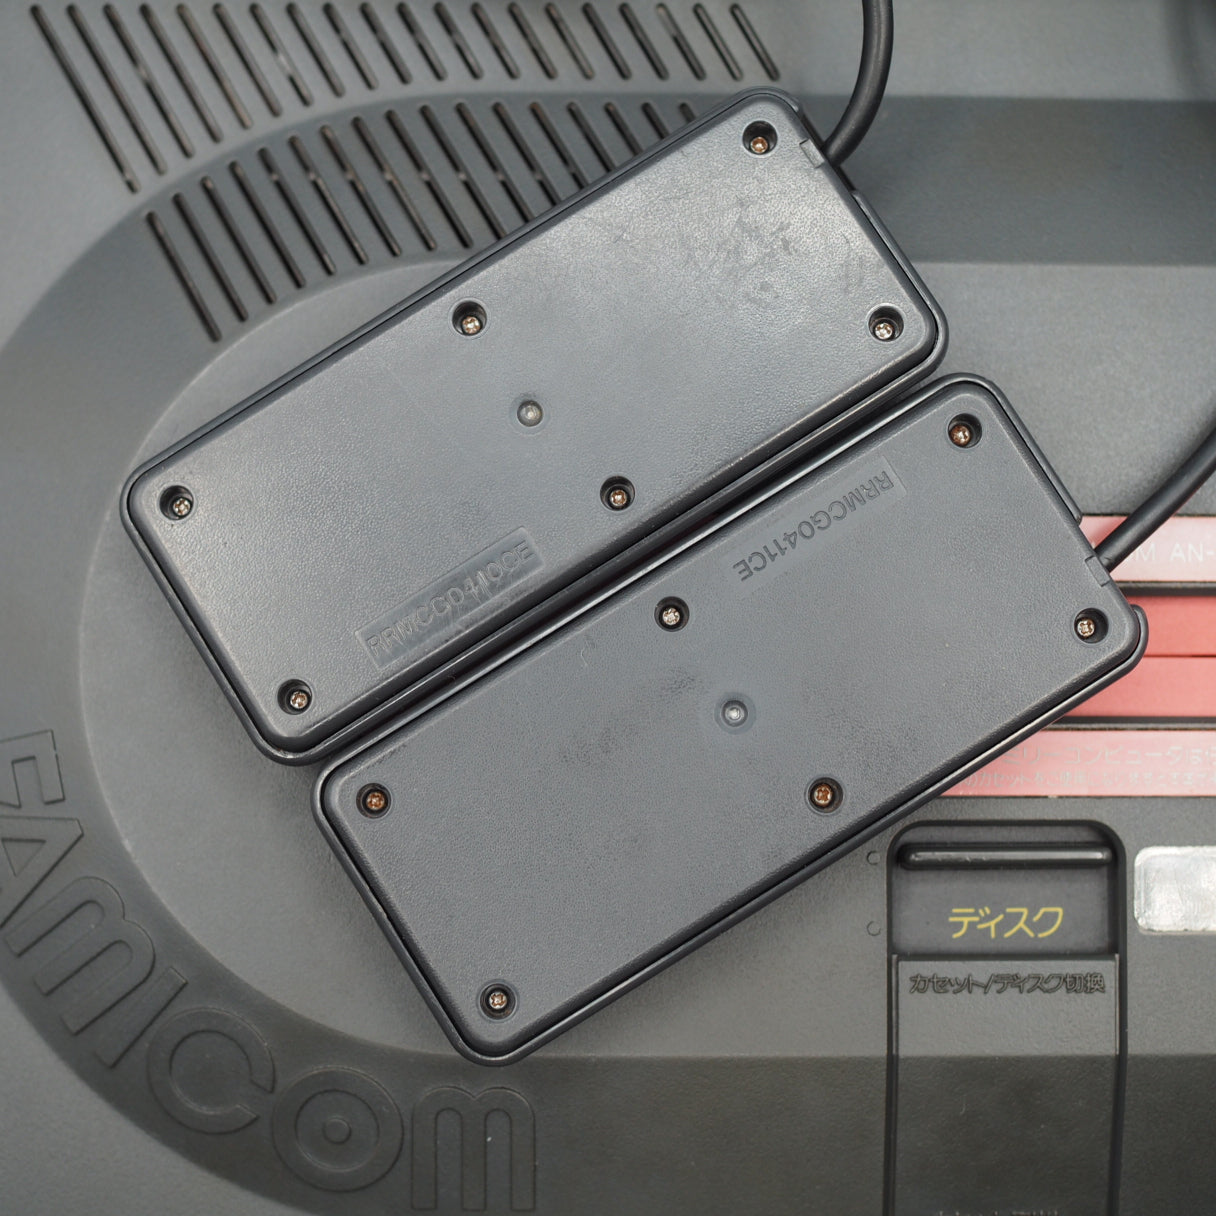 Twin Famicom AN-500B [New Rubber Belt replaced] No.1